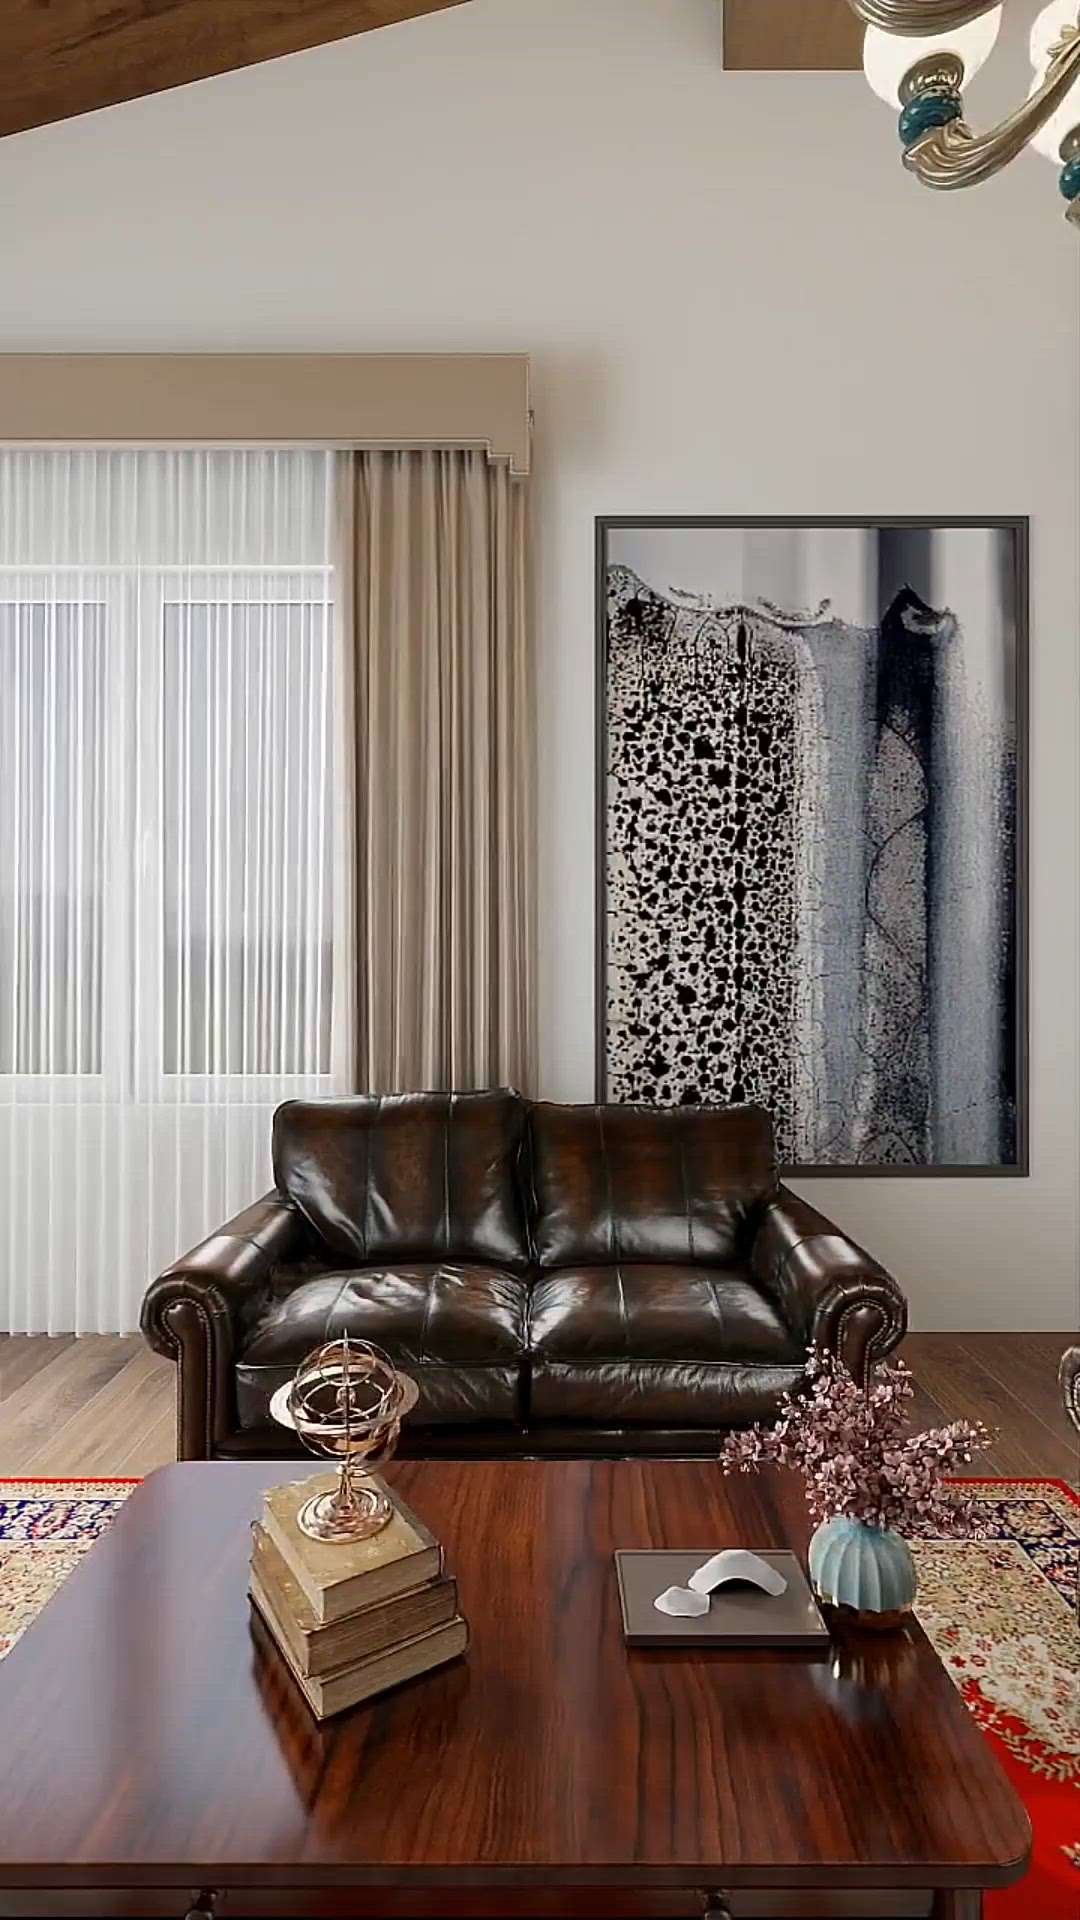 Living Room Design in Old Style. #LivingroomDesigns #LivingRoomCarpets #LivingRoomDecors #livingroomdesign #InteriorDesigner #Architectural&Interior #interiorpainting